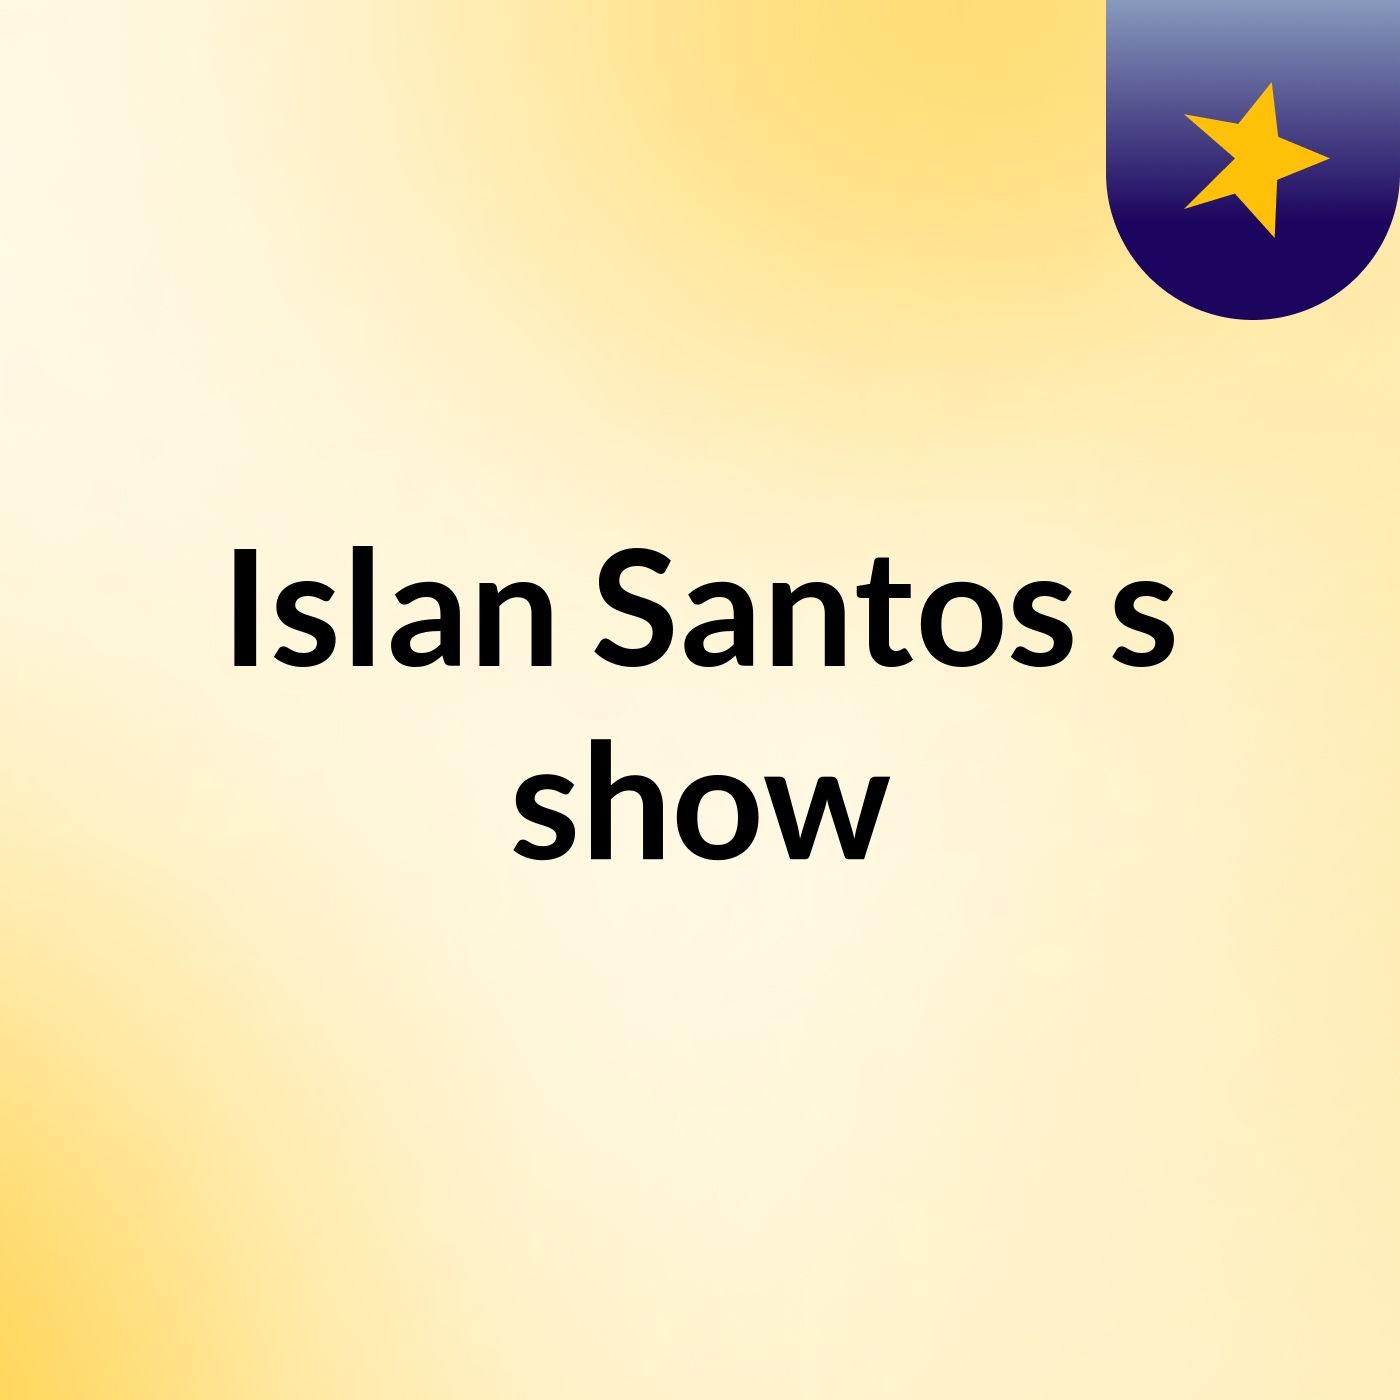 Islan Santos's show